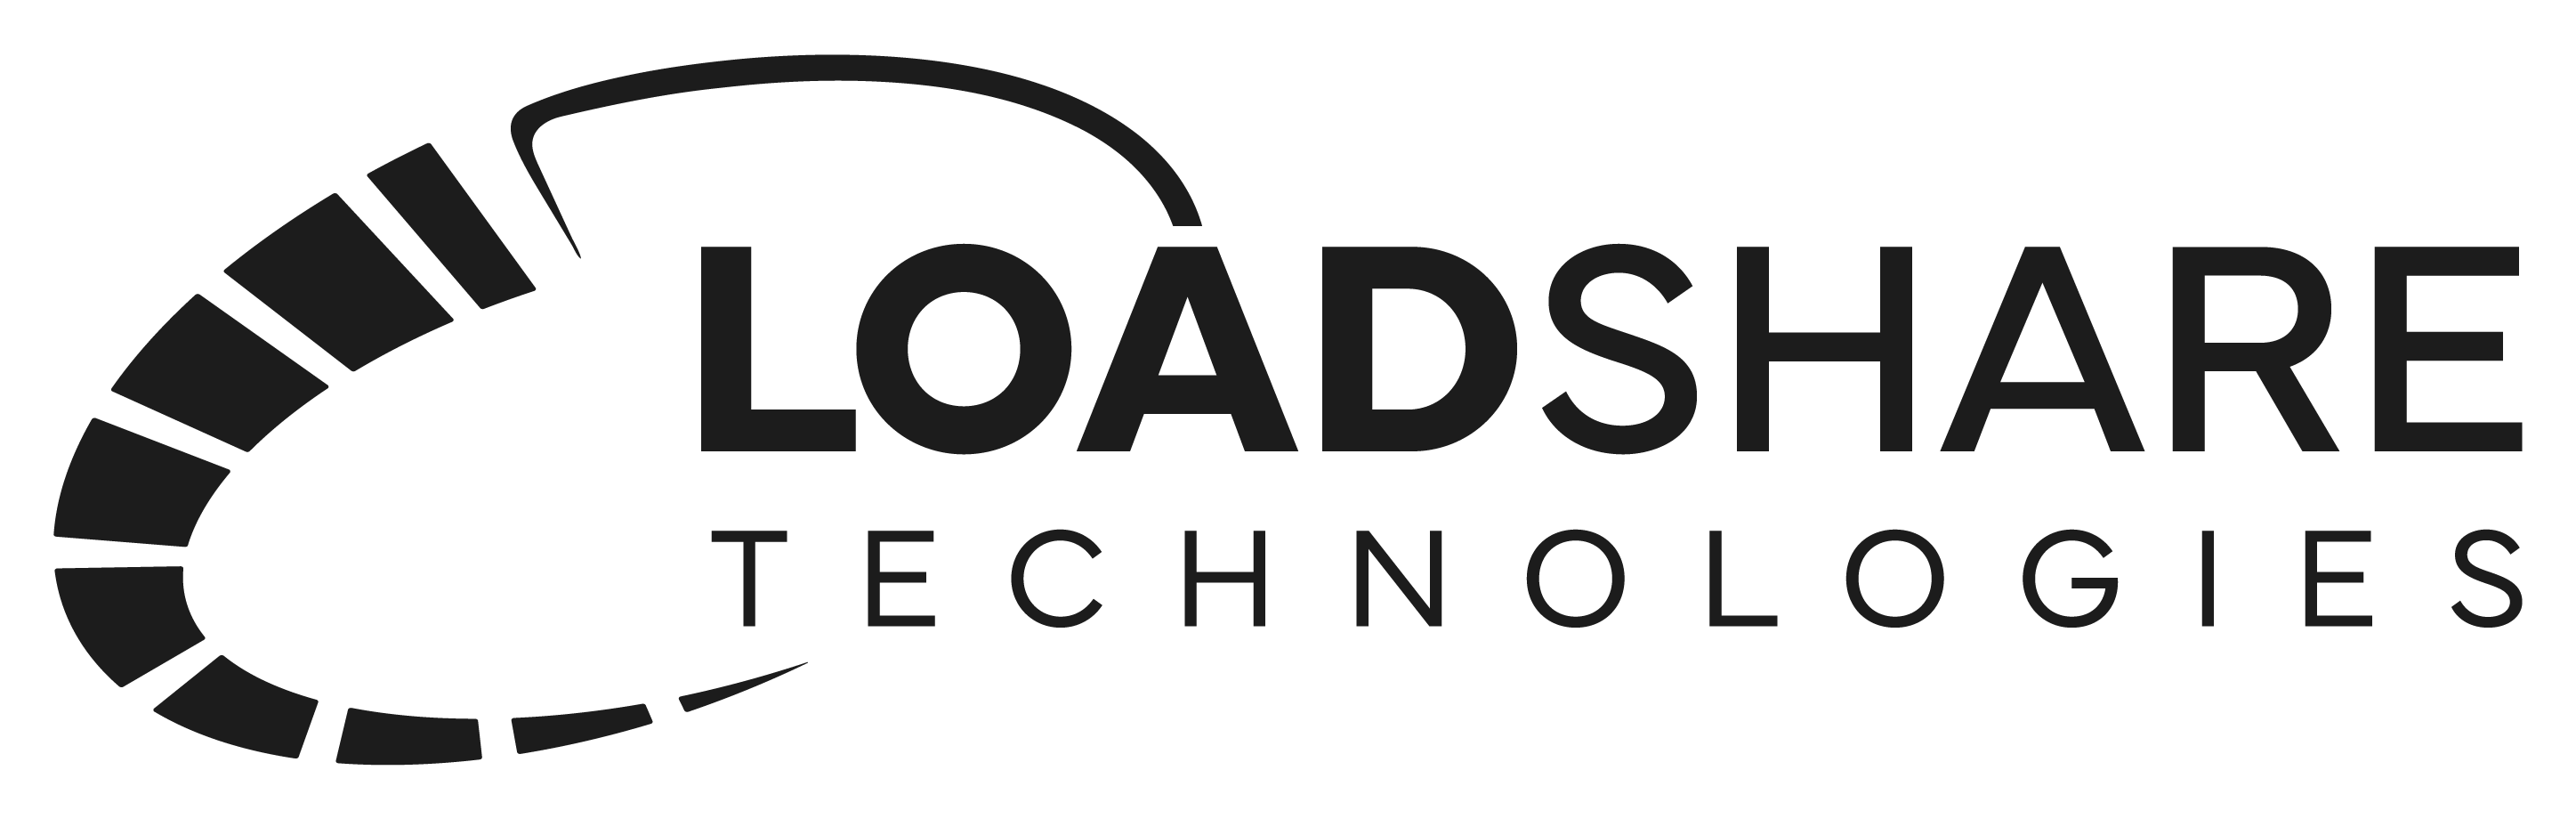 Loadshare Technologies